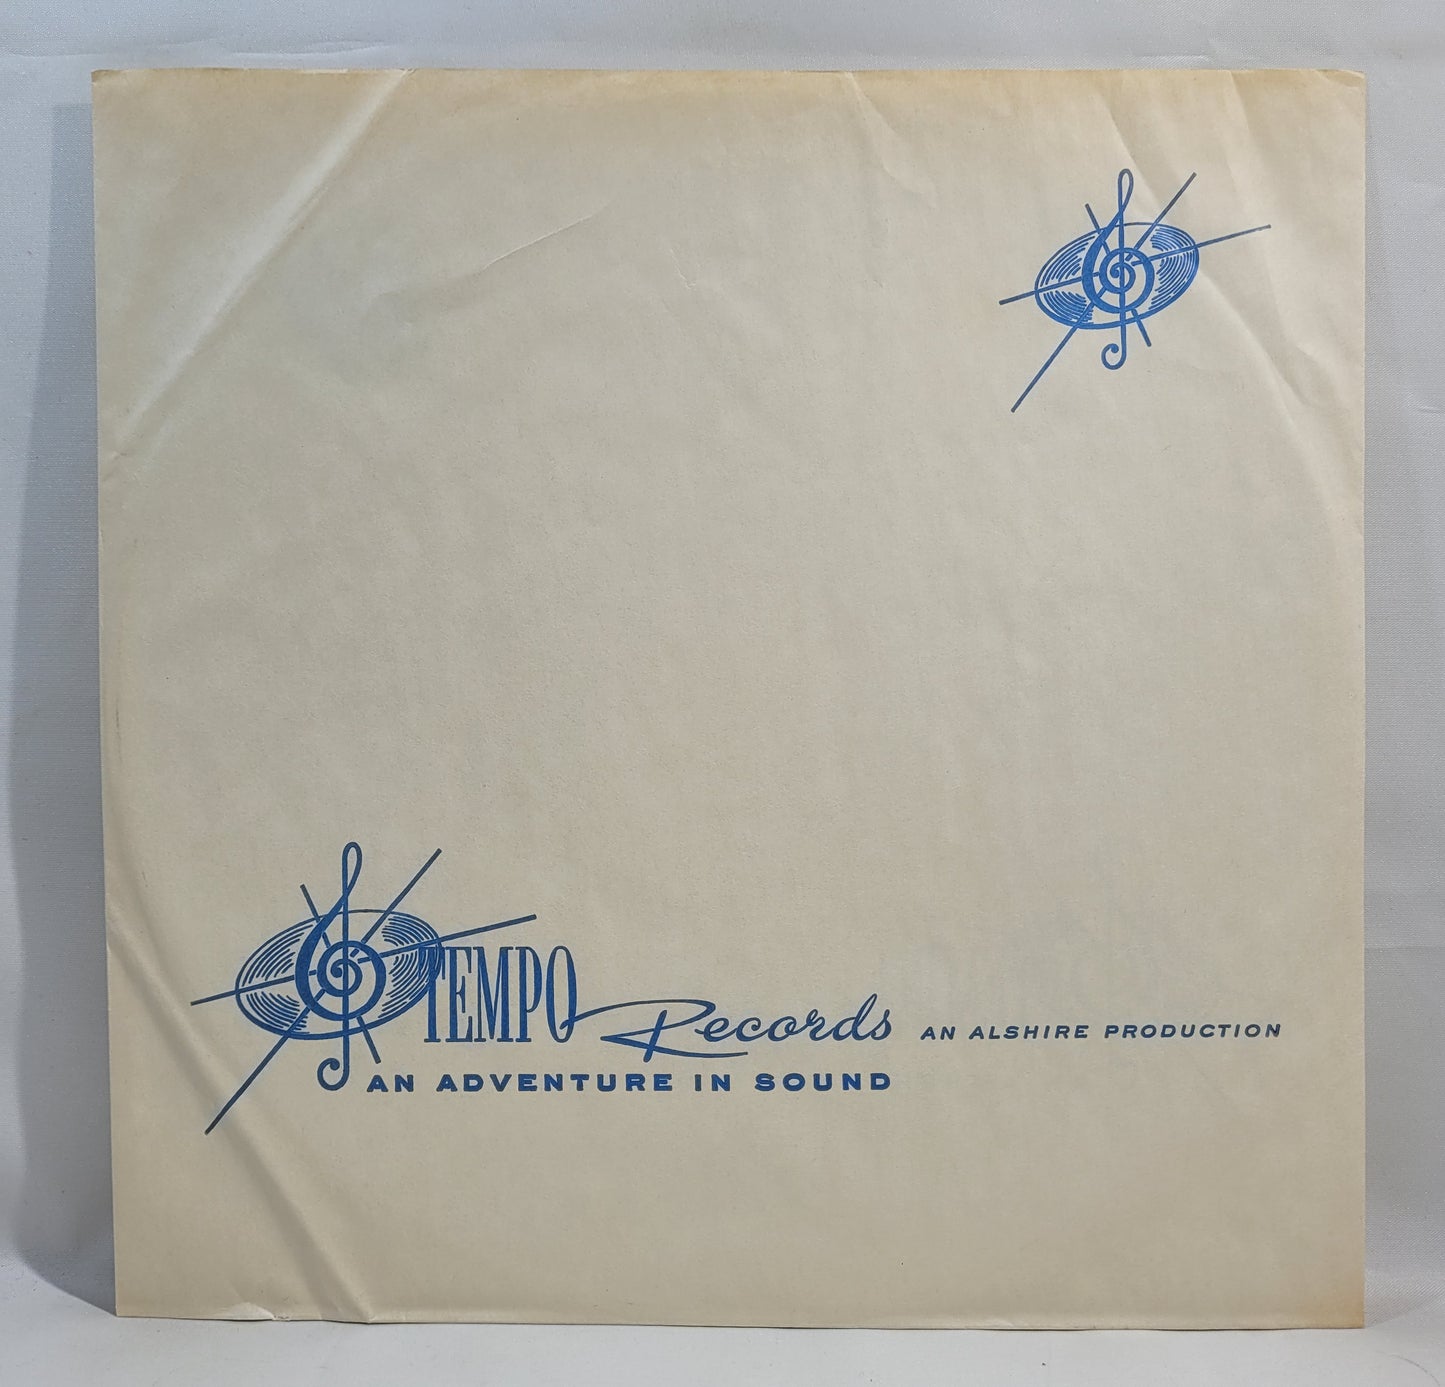 Strings Unlimited - Innamorati [Vinyl Record LP]